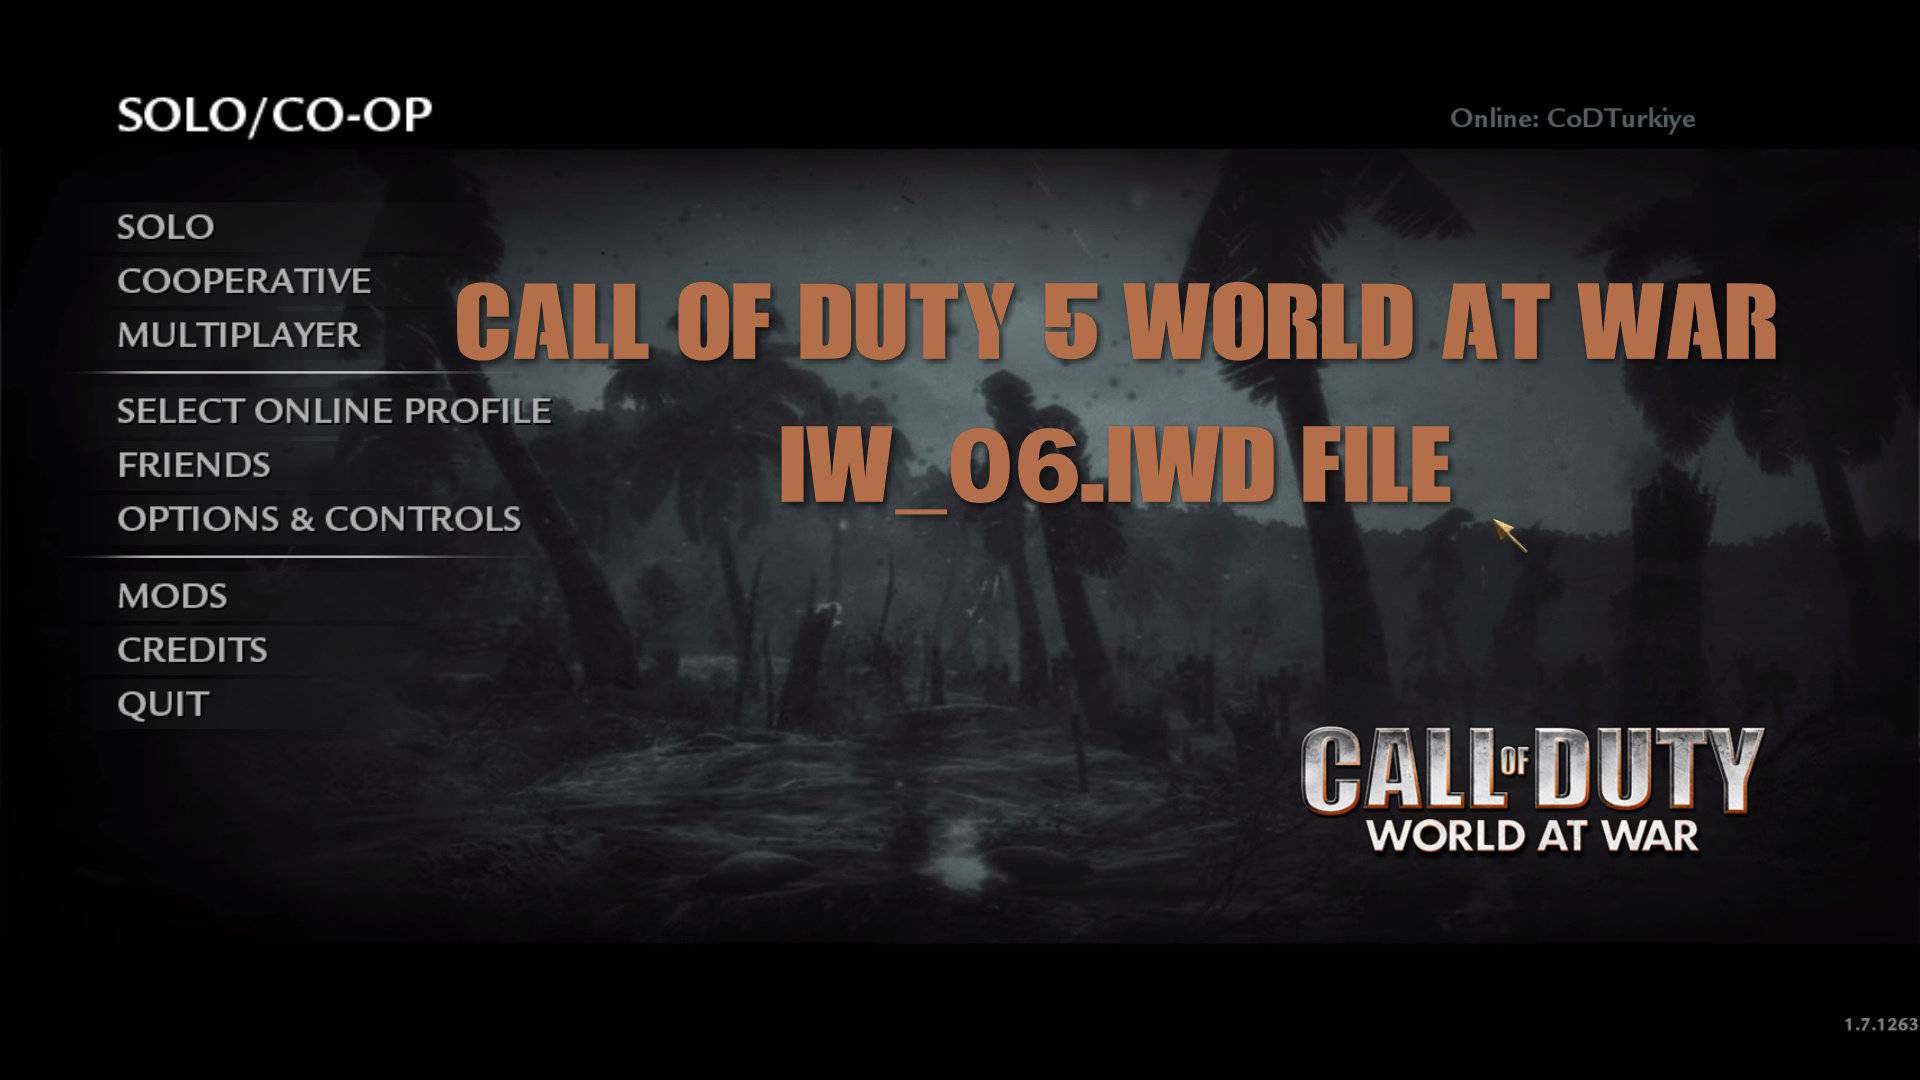 Call of Duty 5 World at War HatalarÄ±, Sorunlar ve Ã‡Ã¶zÃ¼mleri ... - 